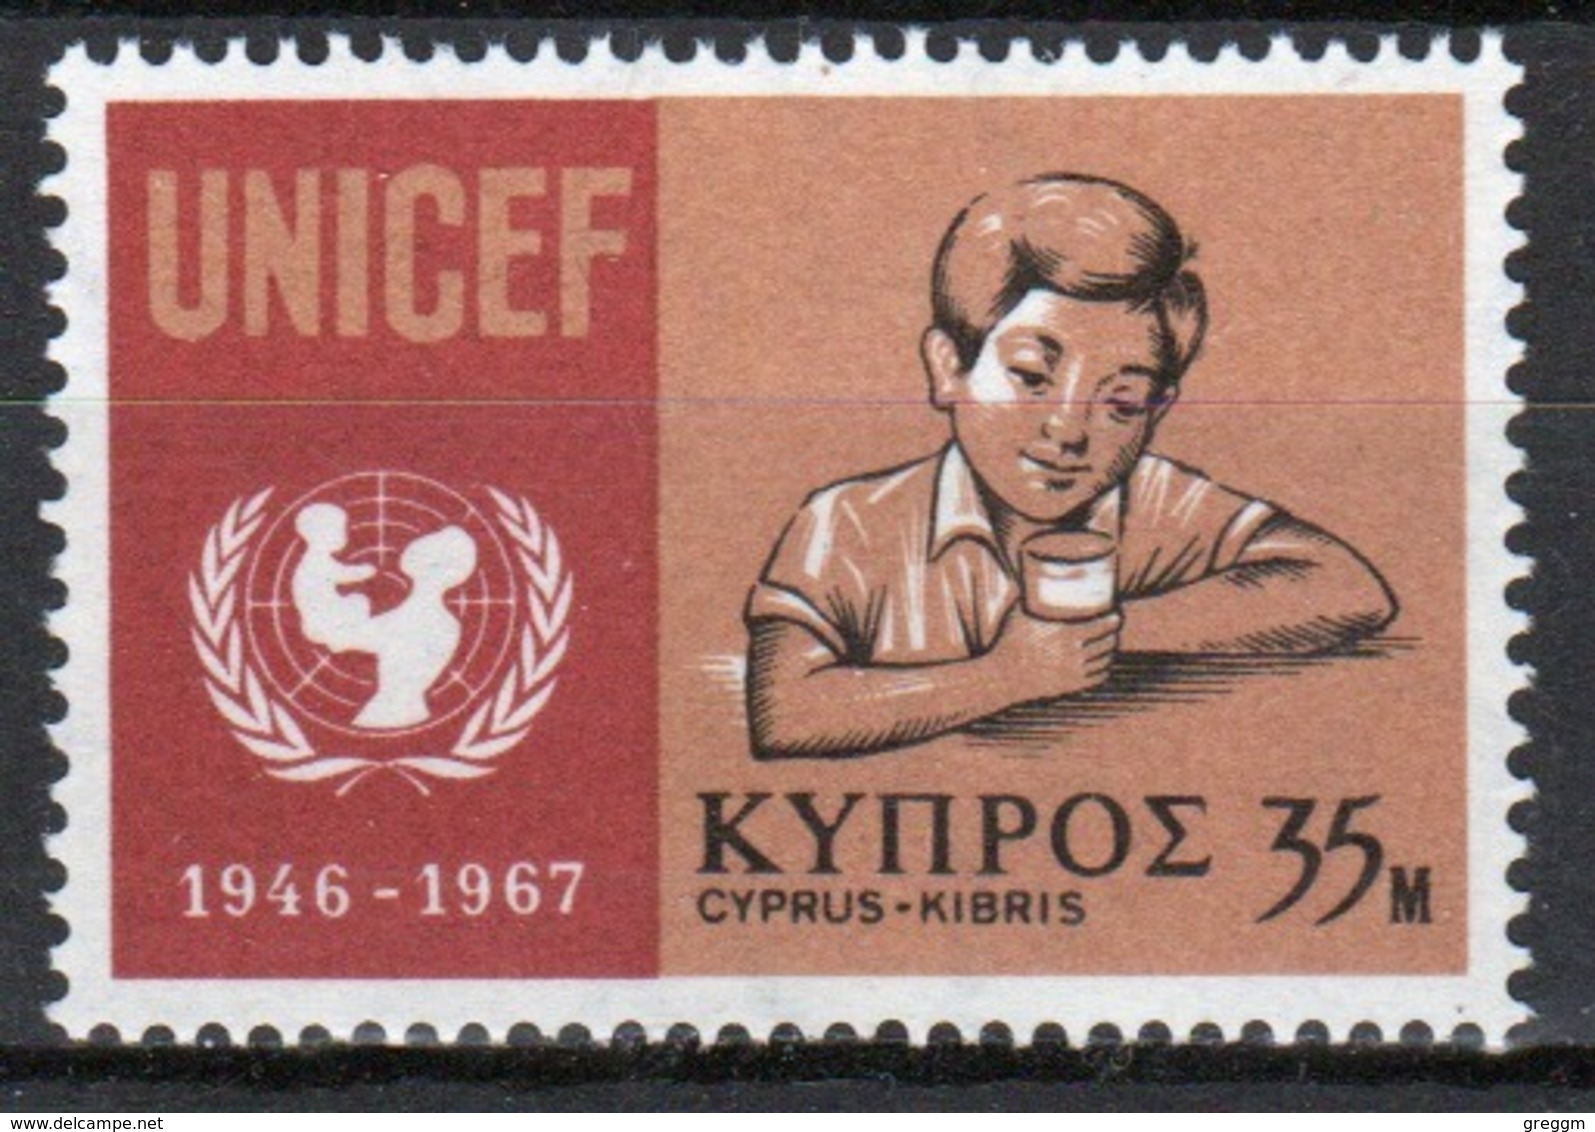 Cyprus Single 35m Stamp To Celebrate UNICEF. - Unused Stamps